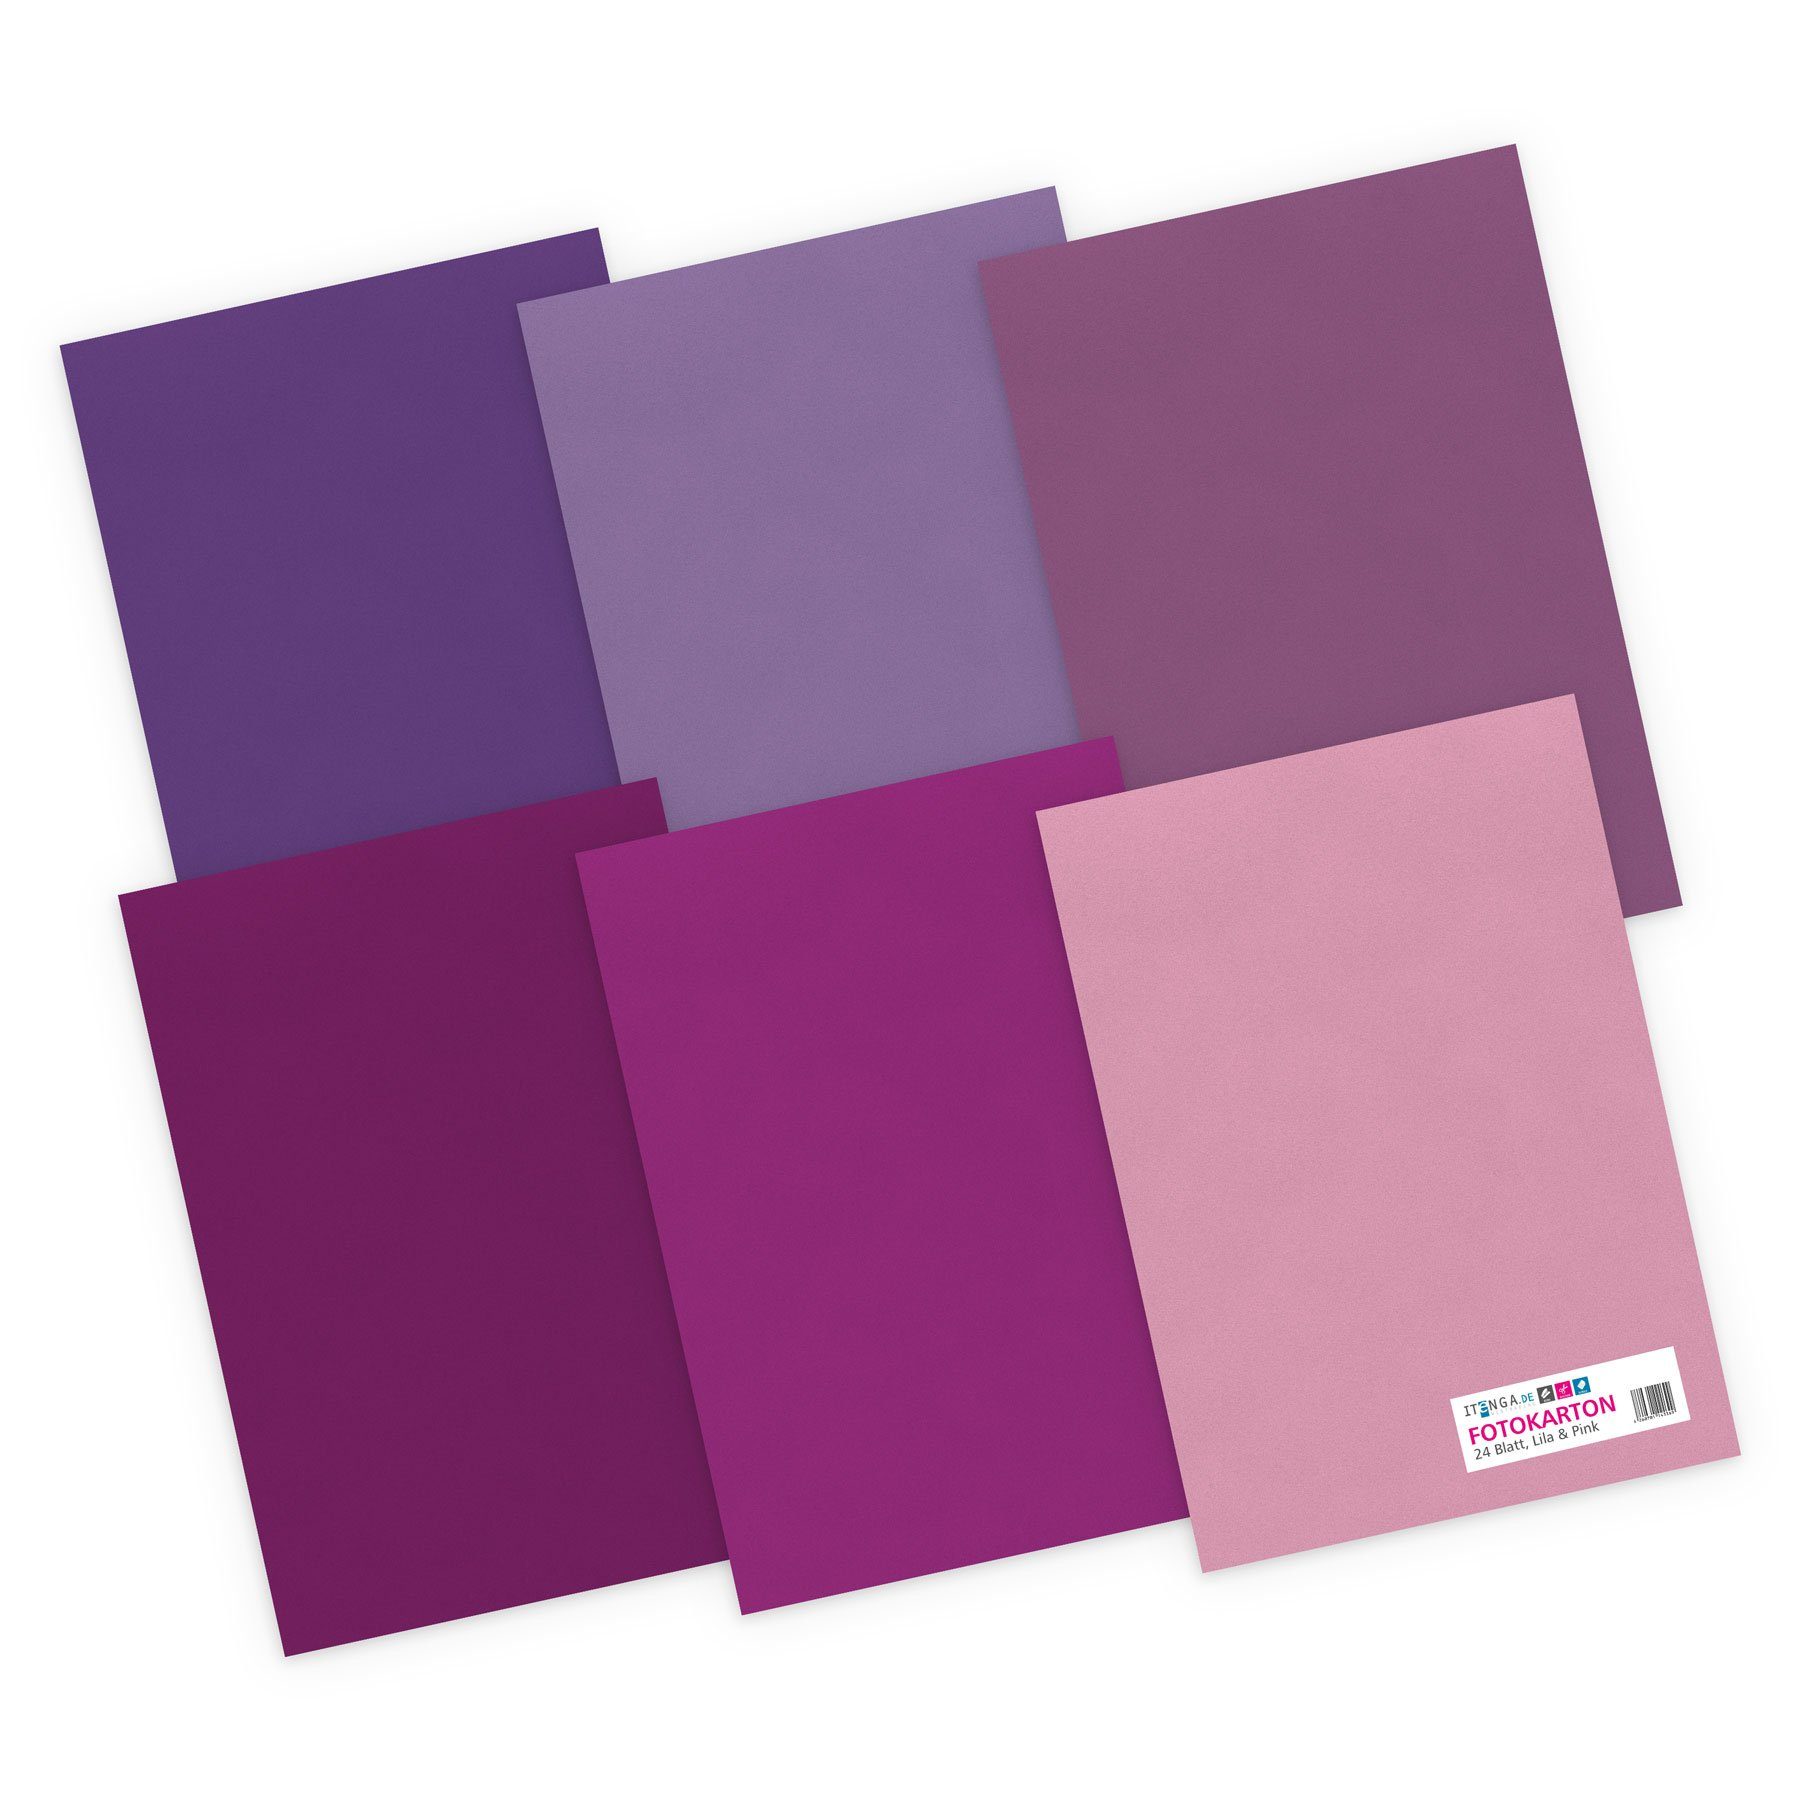 itenga Bastelkartonpapier itenga Tonpapier - A4 130 g/qm 24 Blatt - Lila und Pinktöne 6 Farben j